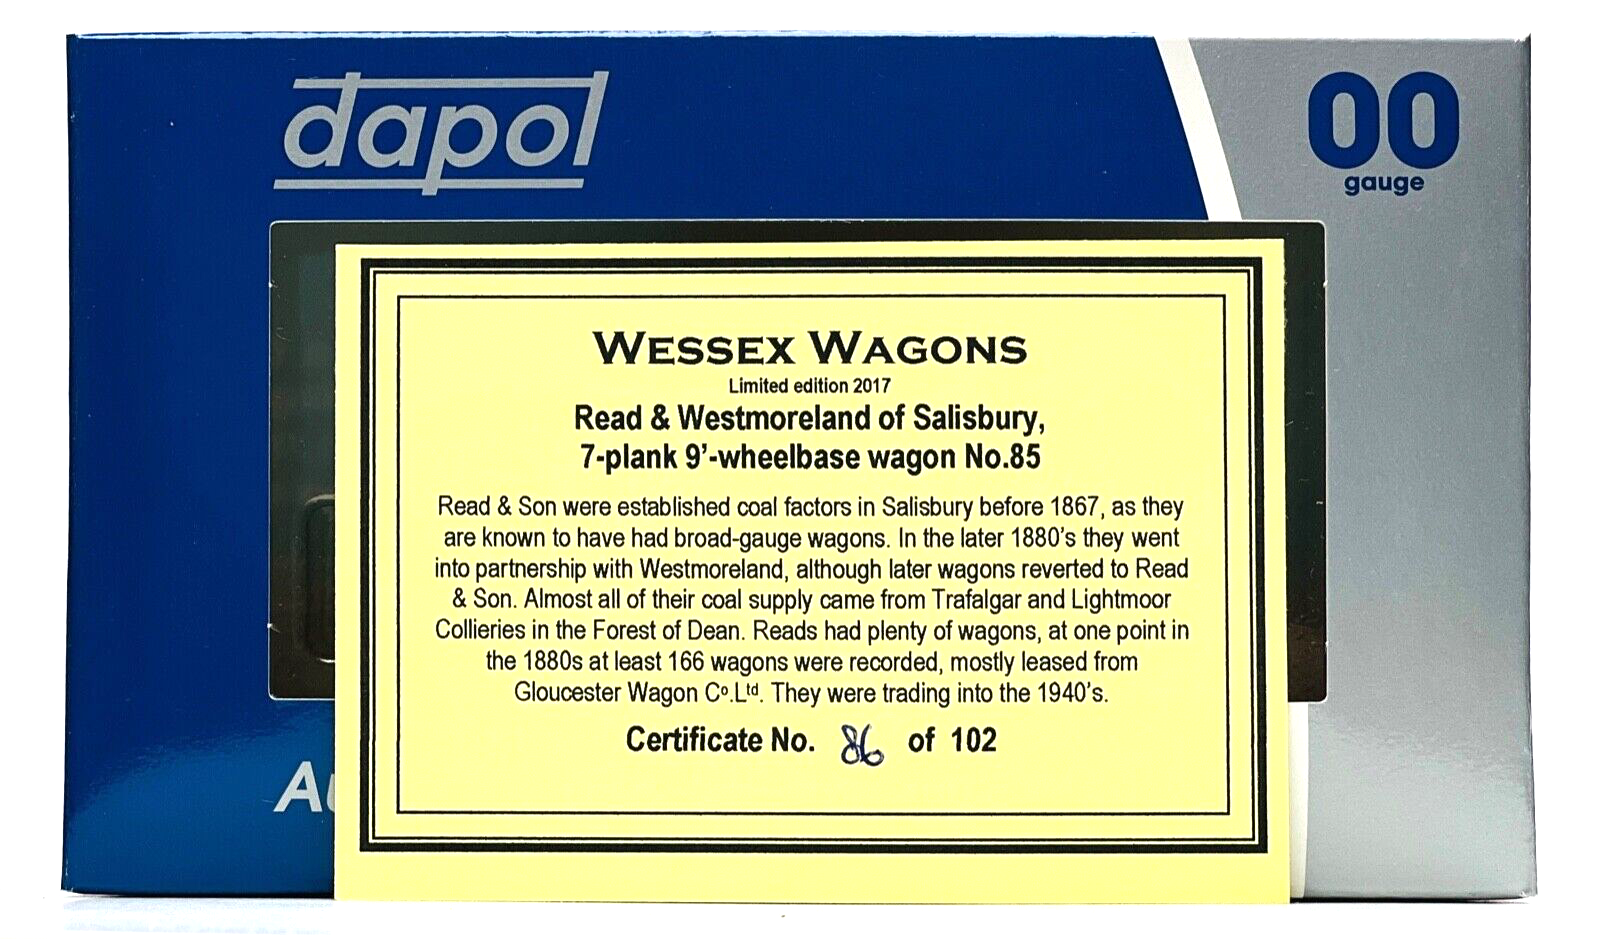 DAPOL 00 GAUGE - READ & WESTMORELAND SALISBURY 7 PLANK NO.85 (WESSEX WAGONS)